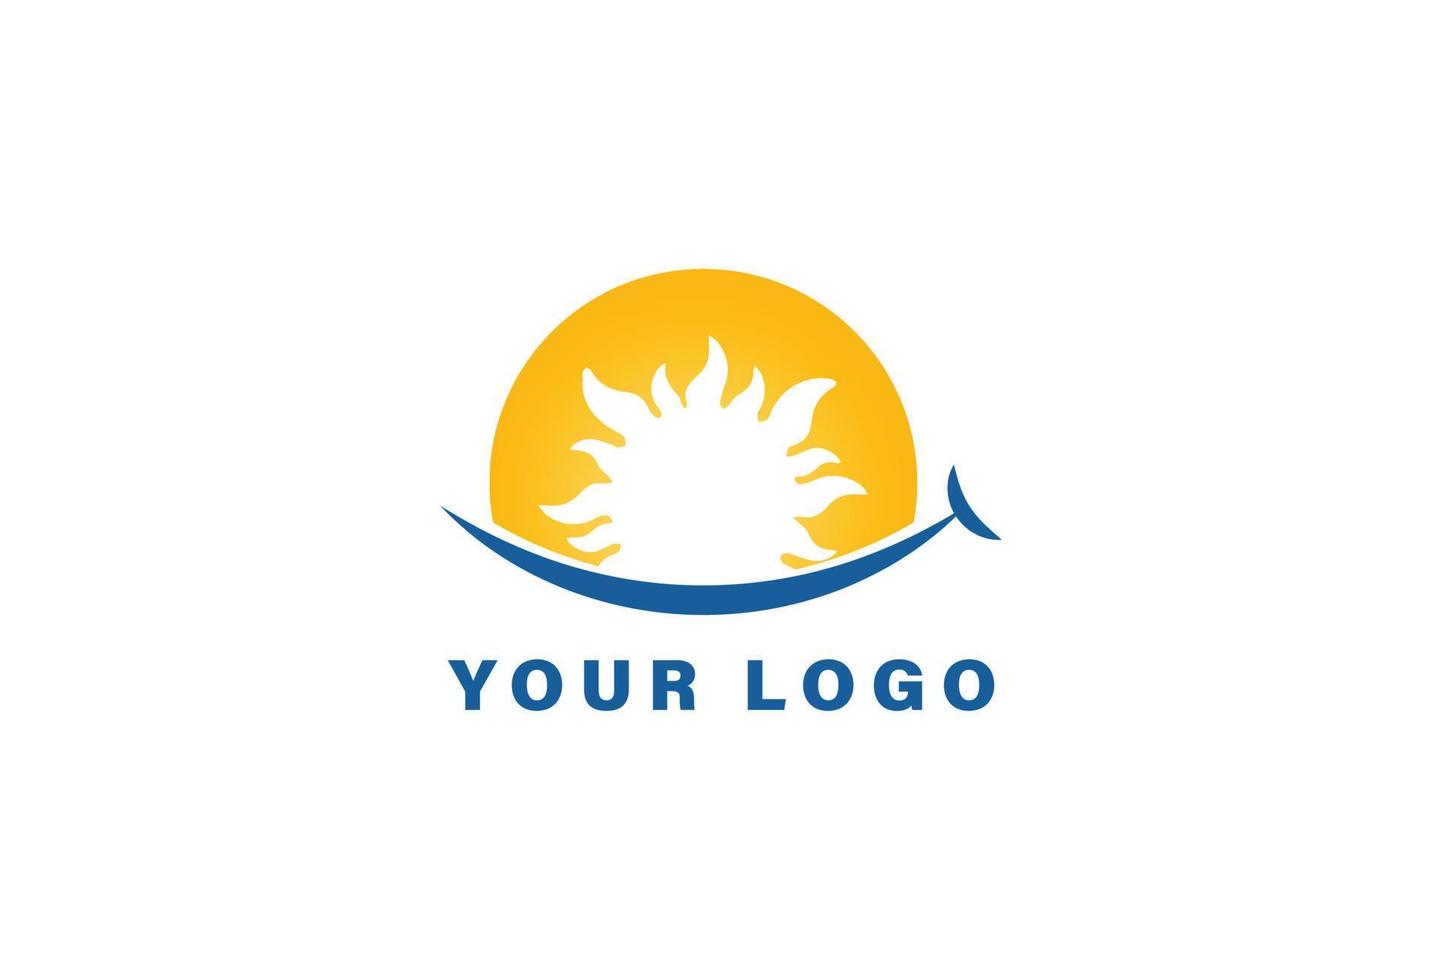 Sol leende logotyp design mall vektor